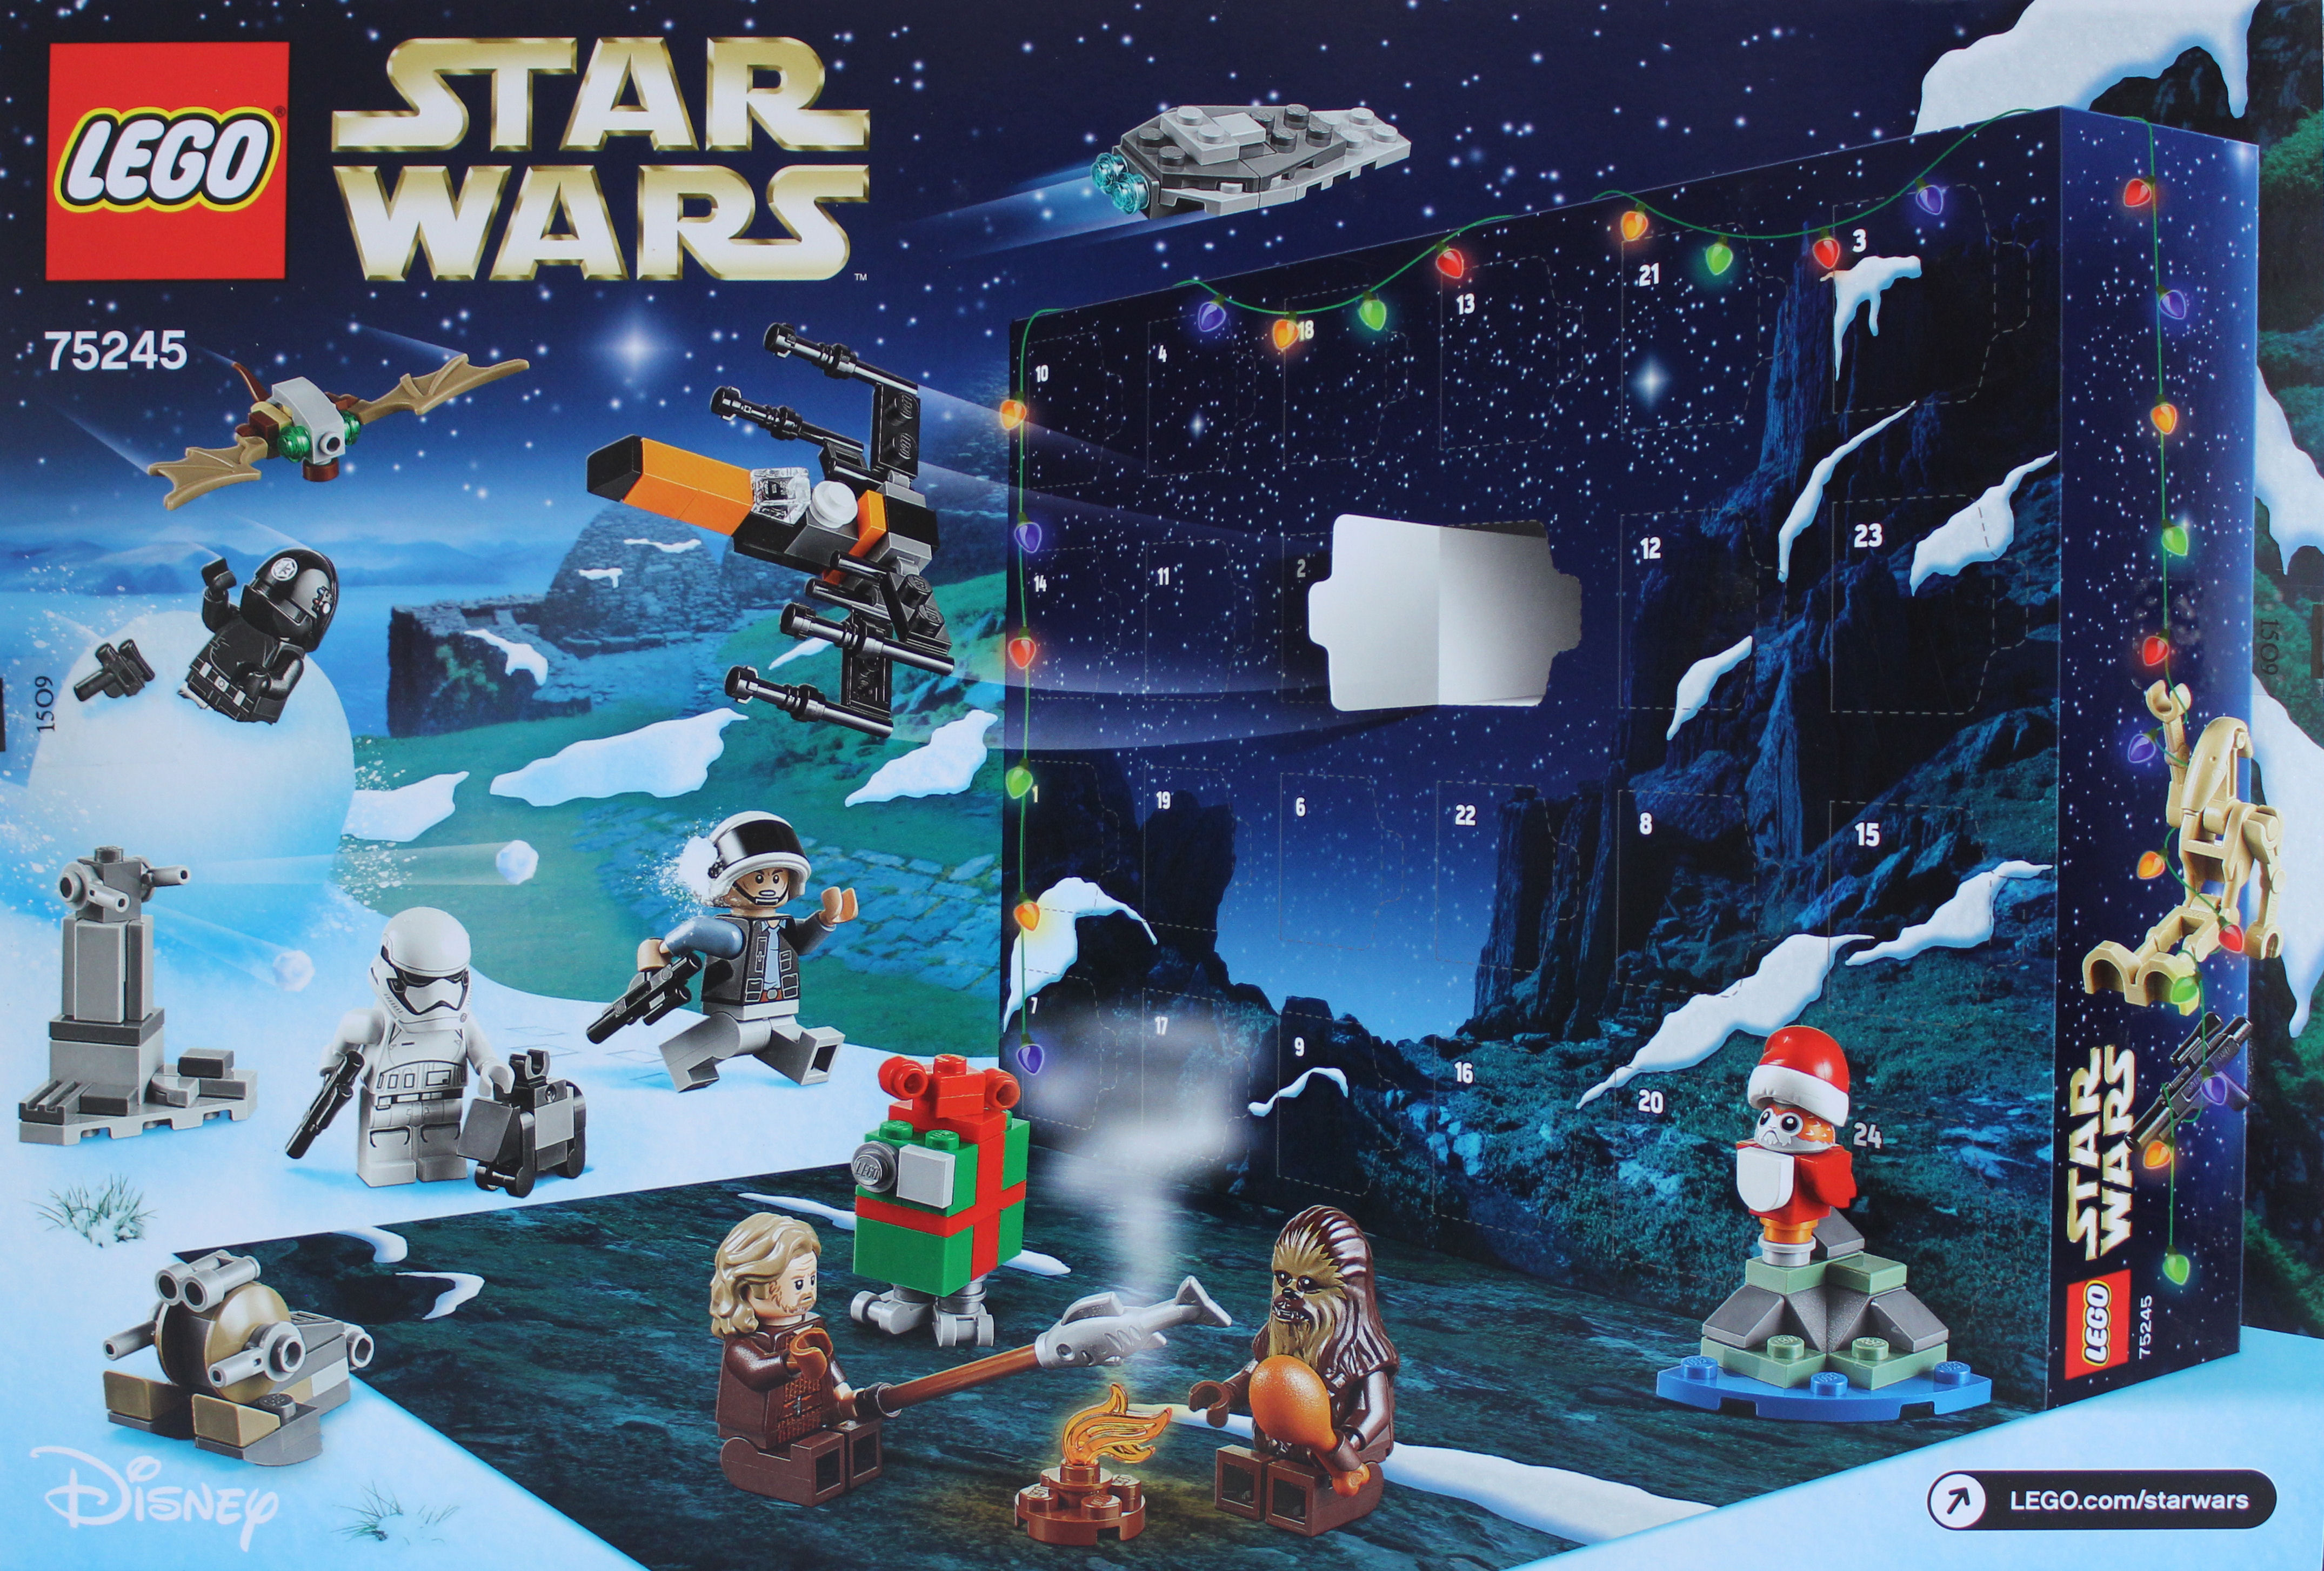 Advent Calendar Star Wars Lego Customize and Print